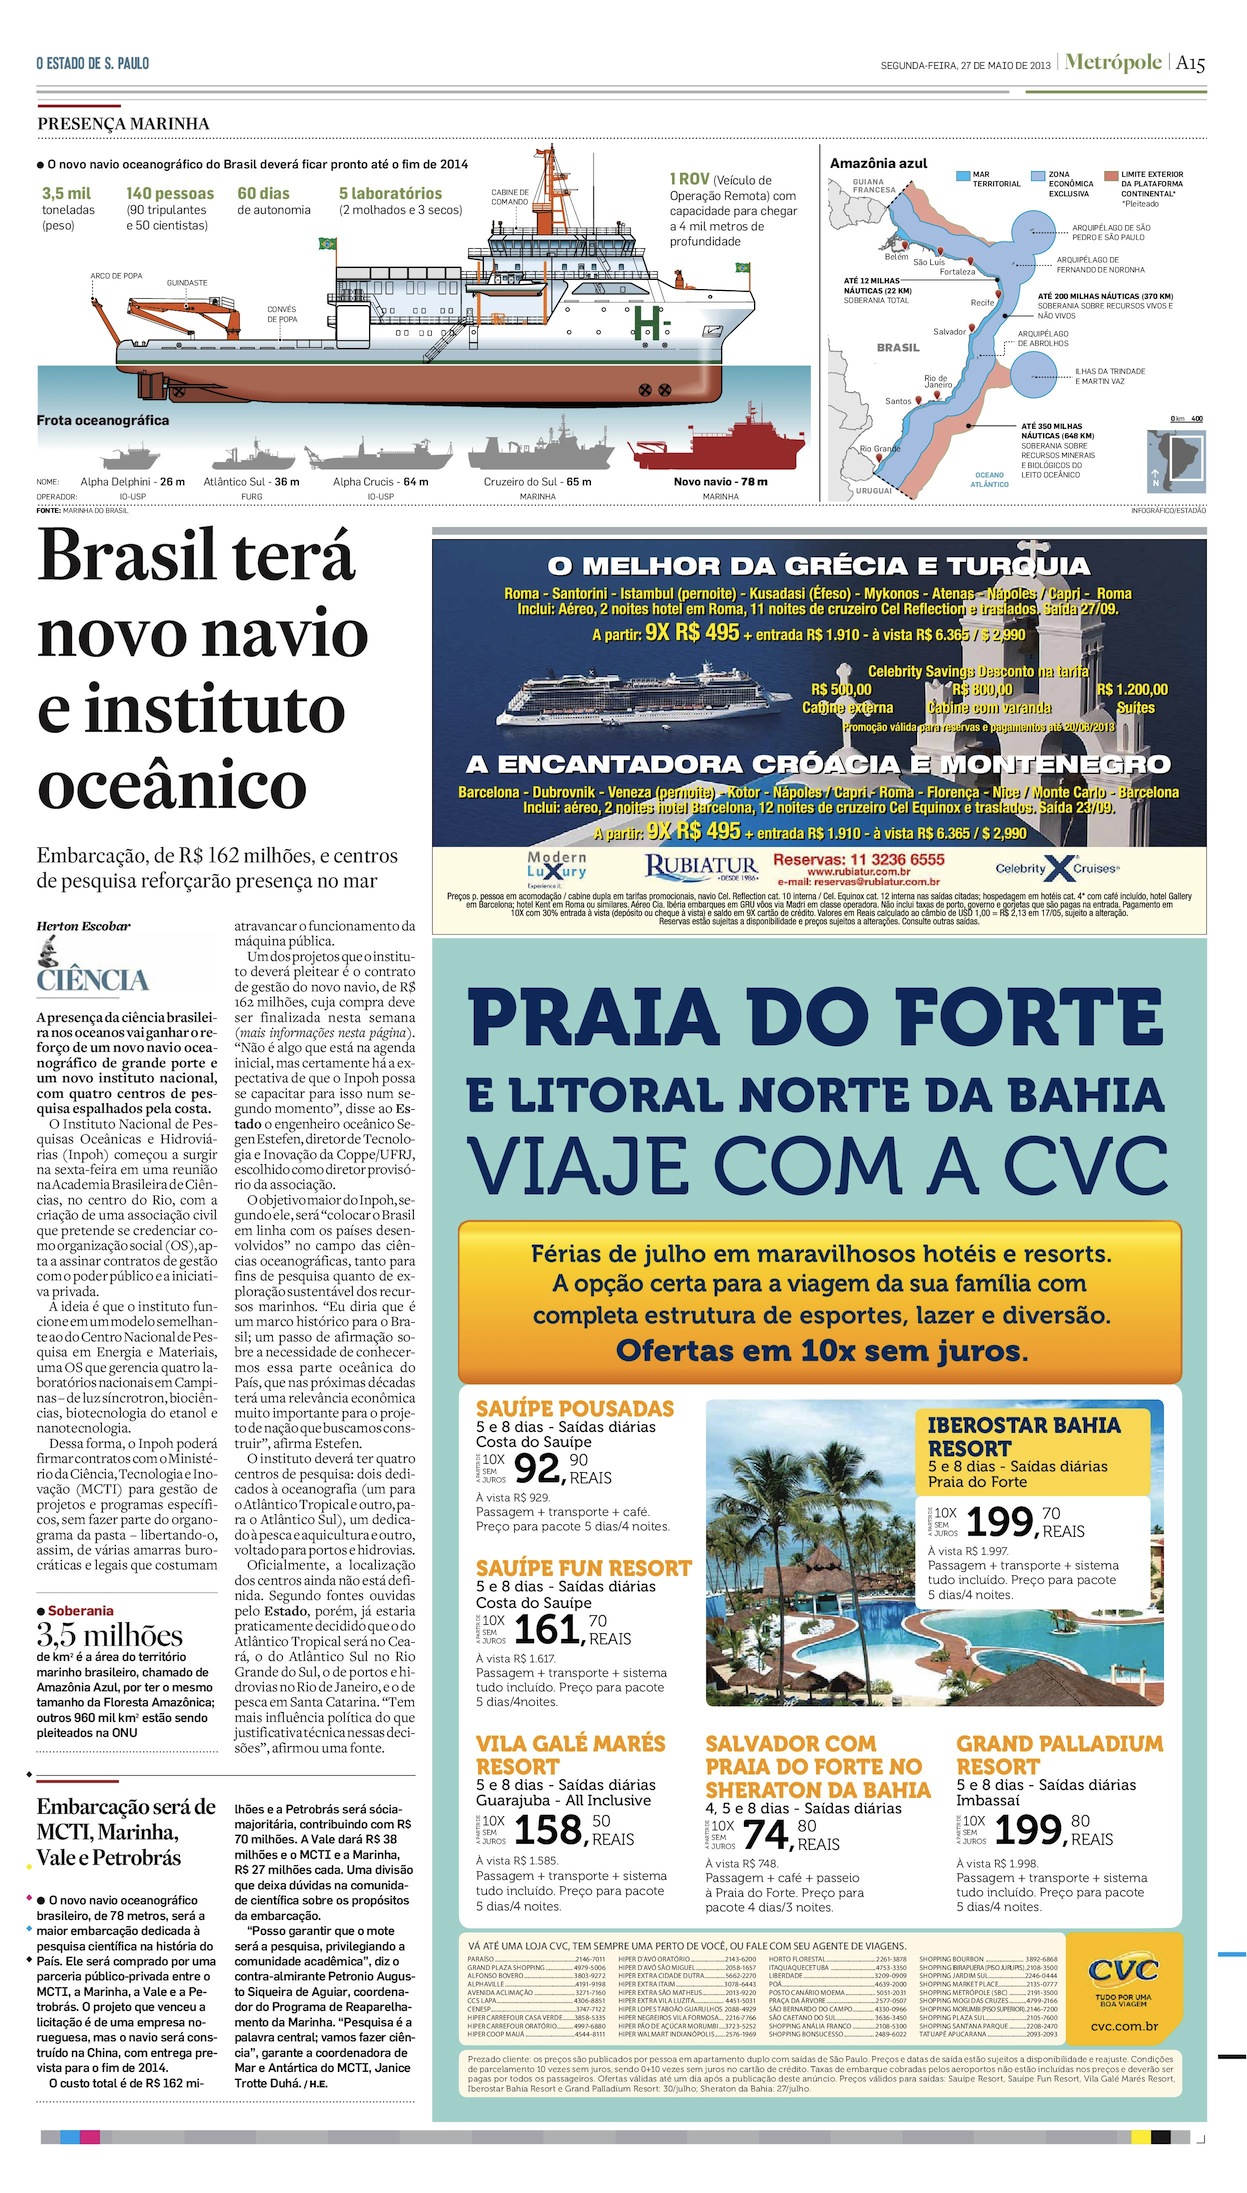 Brasil terá novo navio e instituto oceanográficos